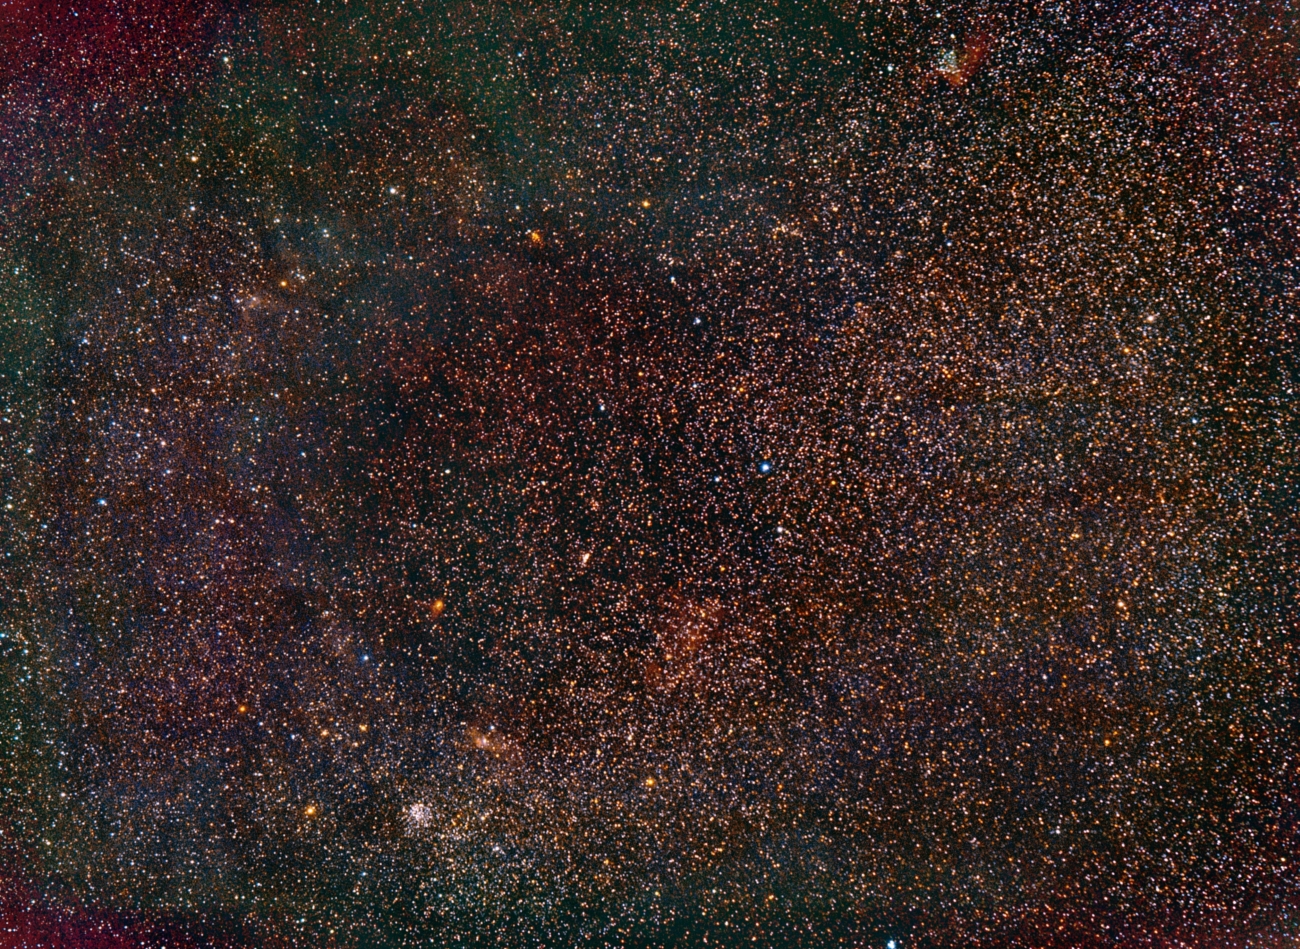 M52 NGC7380 170x30s 180921 samy135 fits10 41300